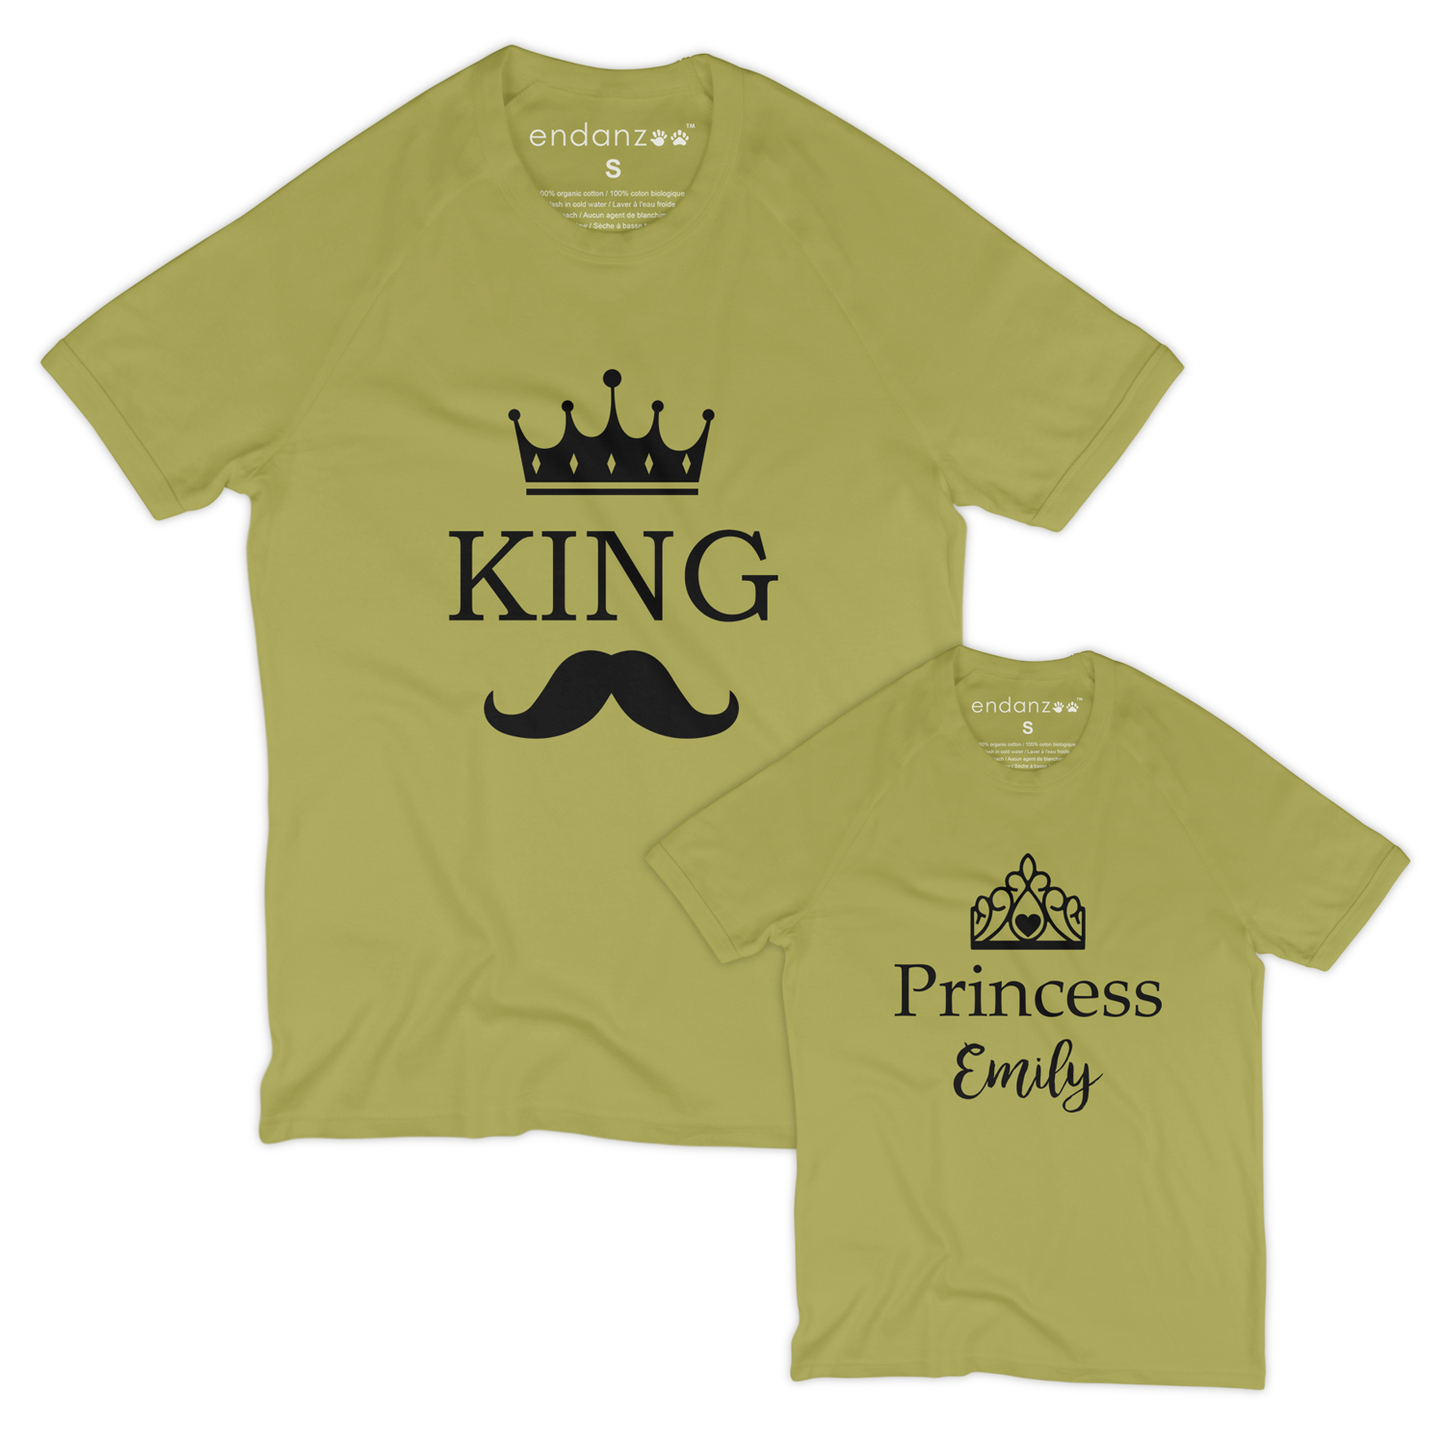 [Personalized] Matching Dad and Daughter Organic Tee Shirts - King & Princess